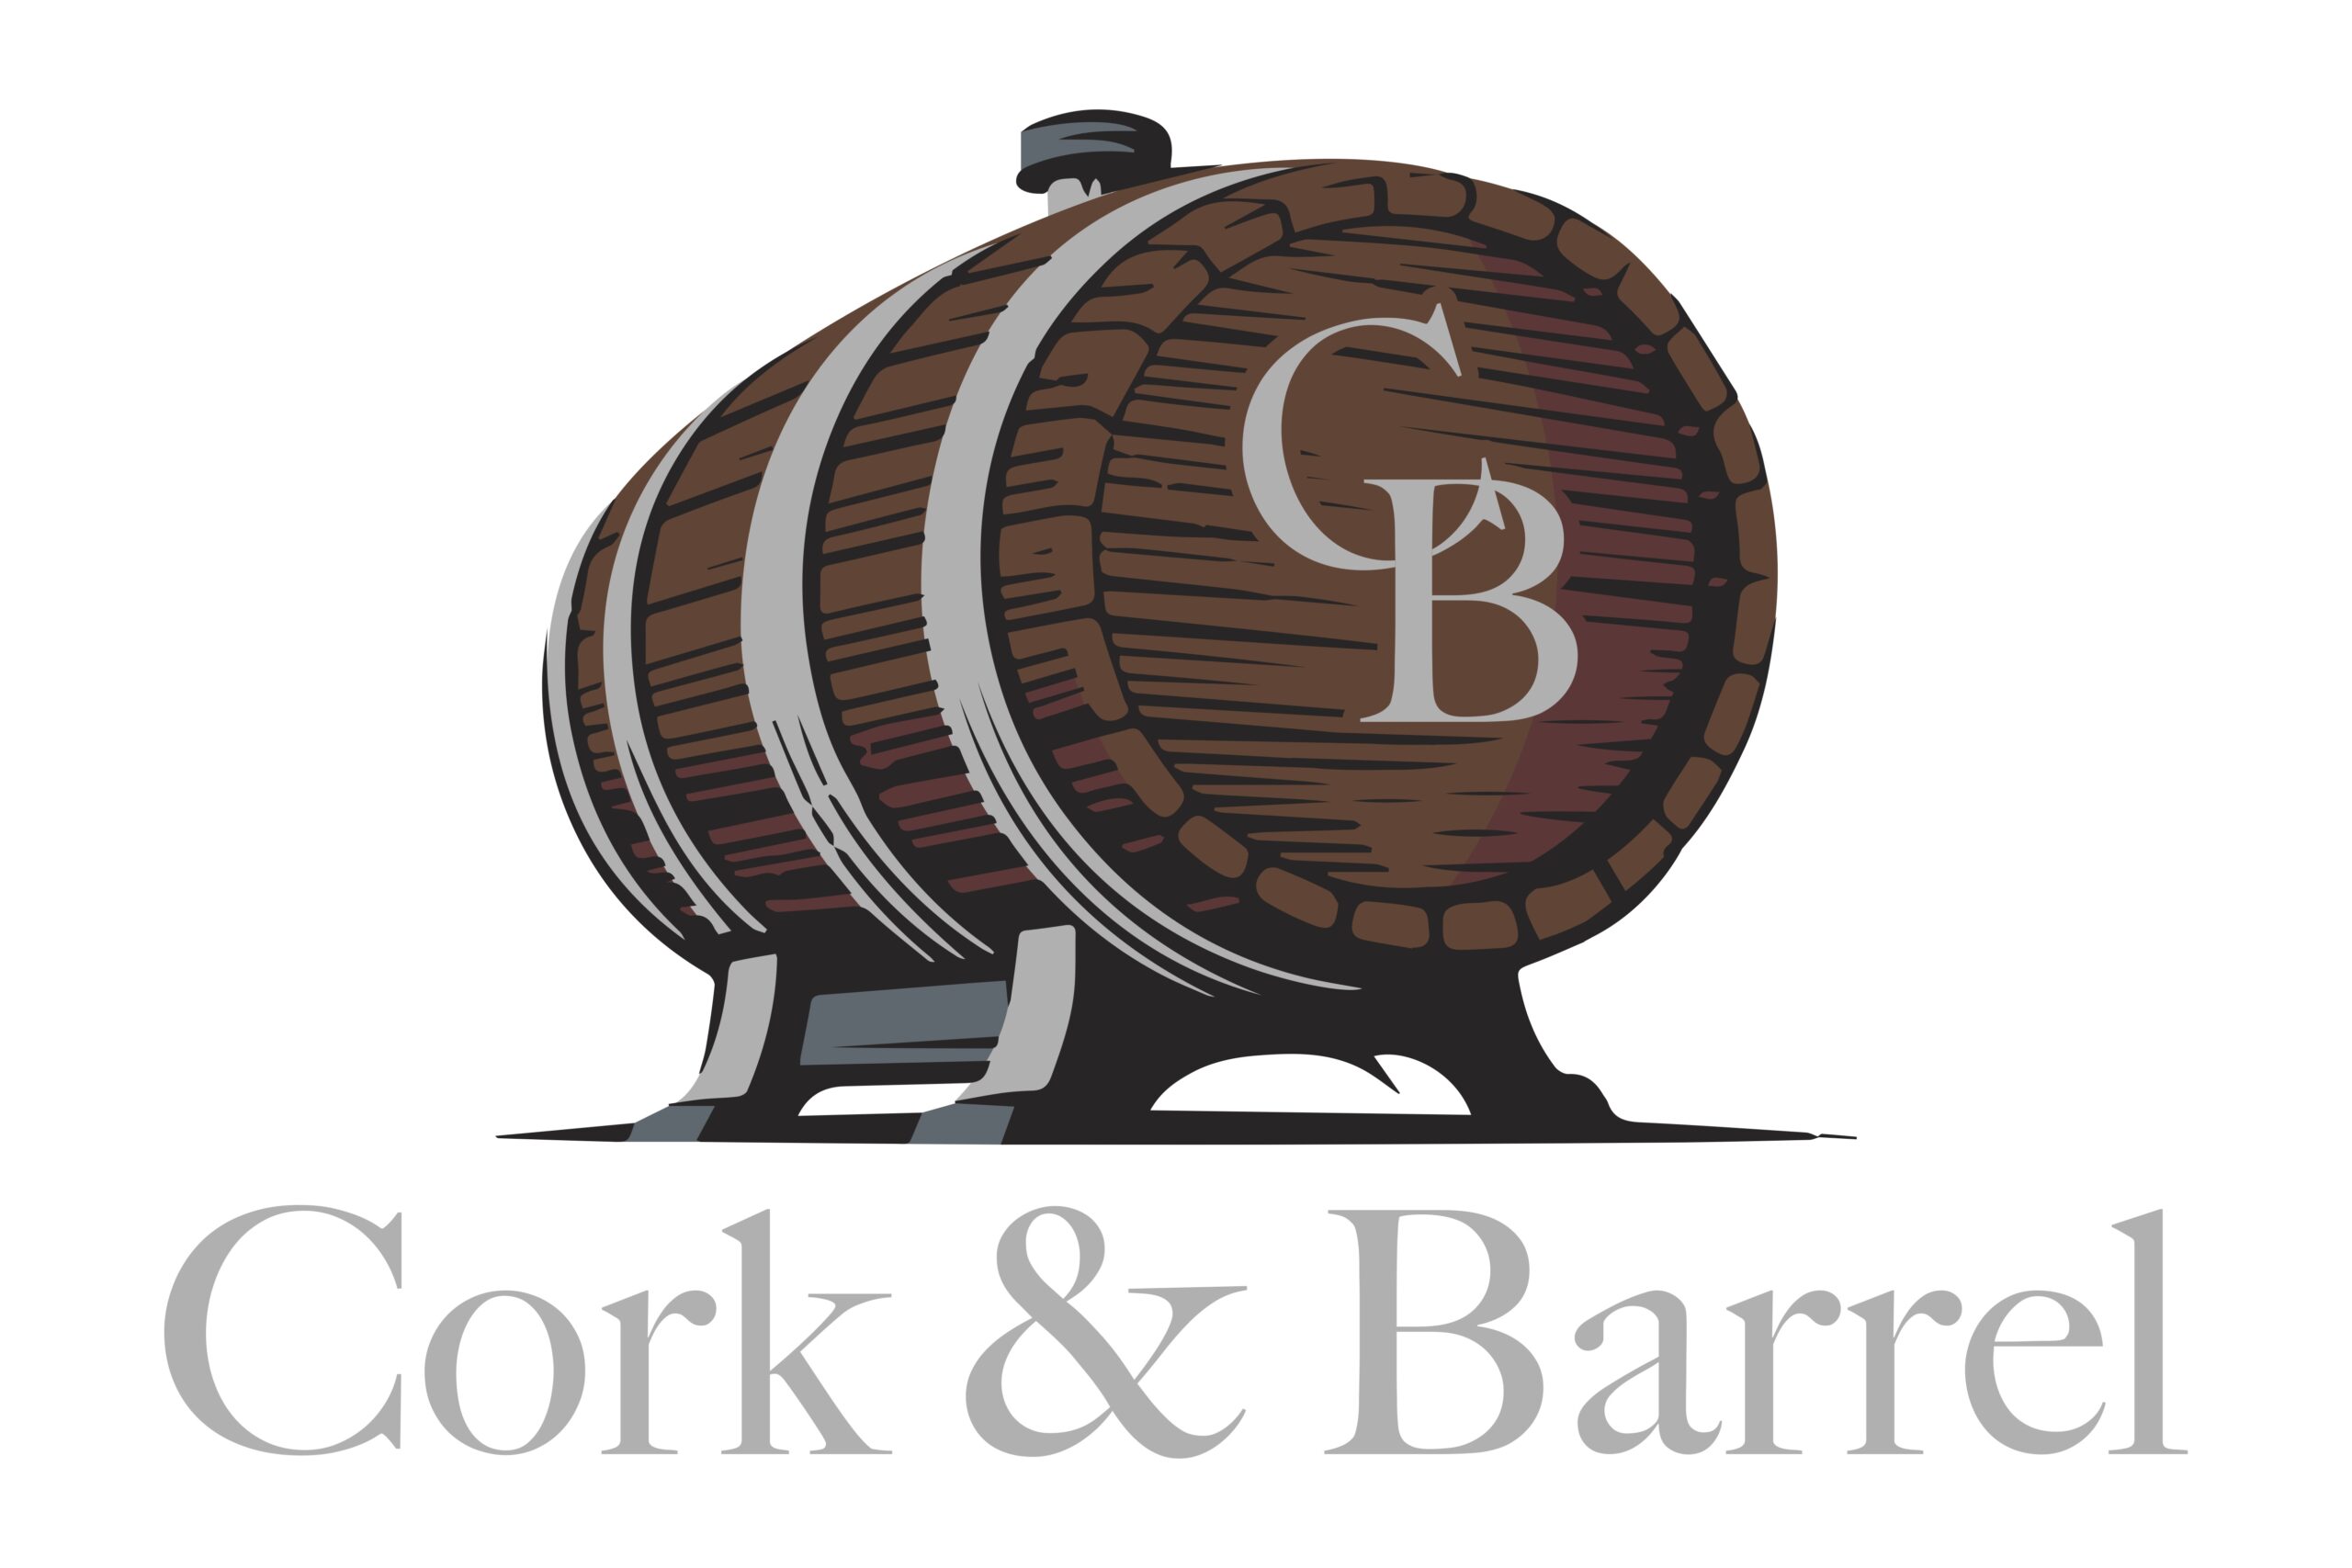 Cork & Barrel logo - JPEG